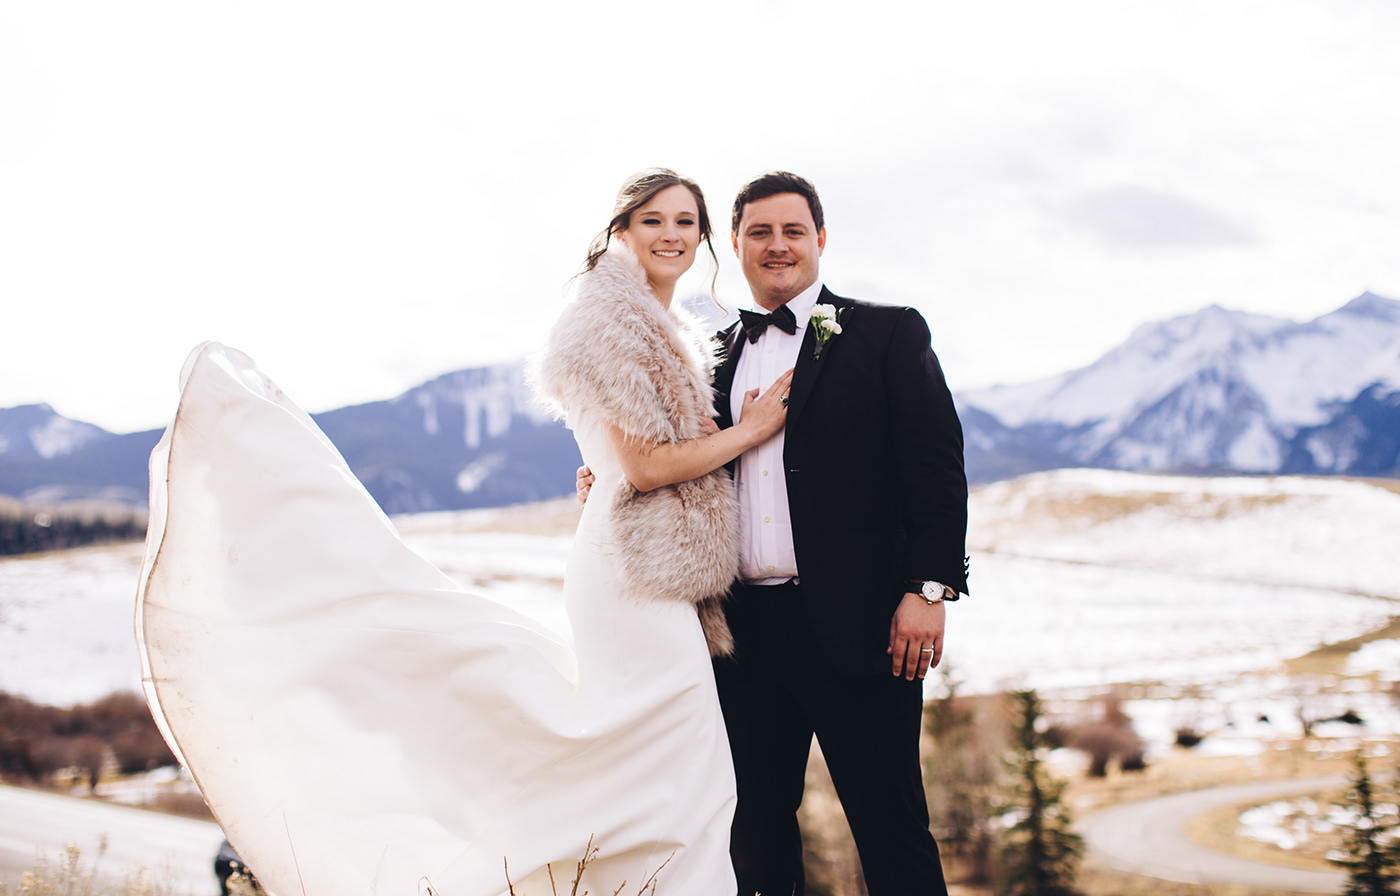 Colorado mountains Photography  portrait Portraiture snow wedding winter